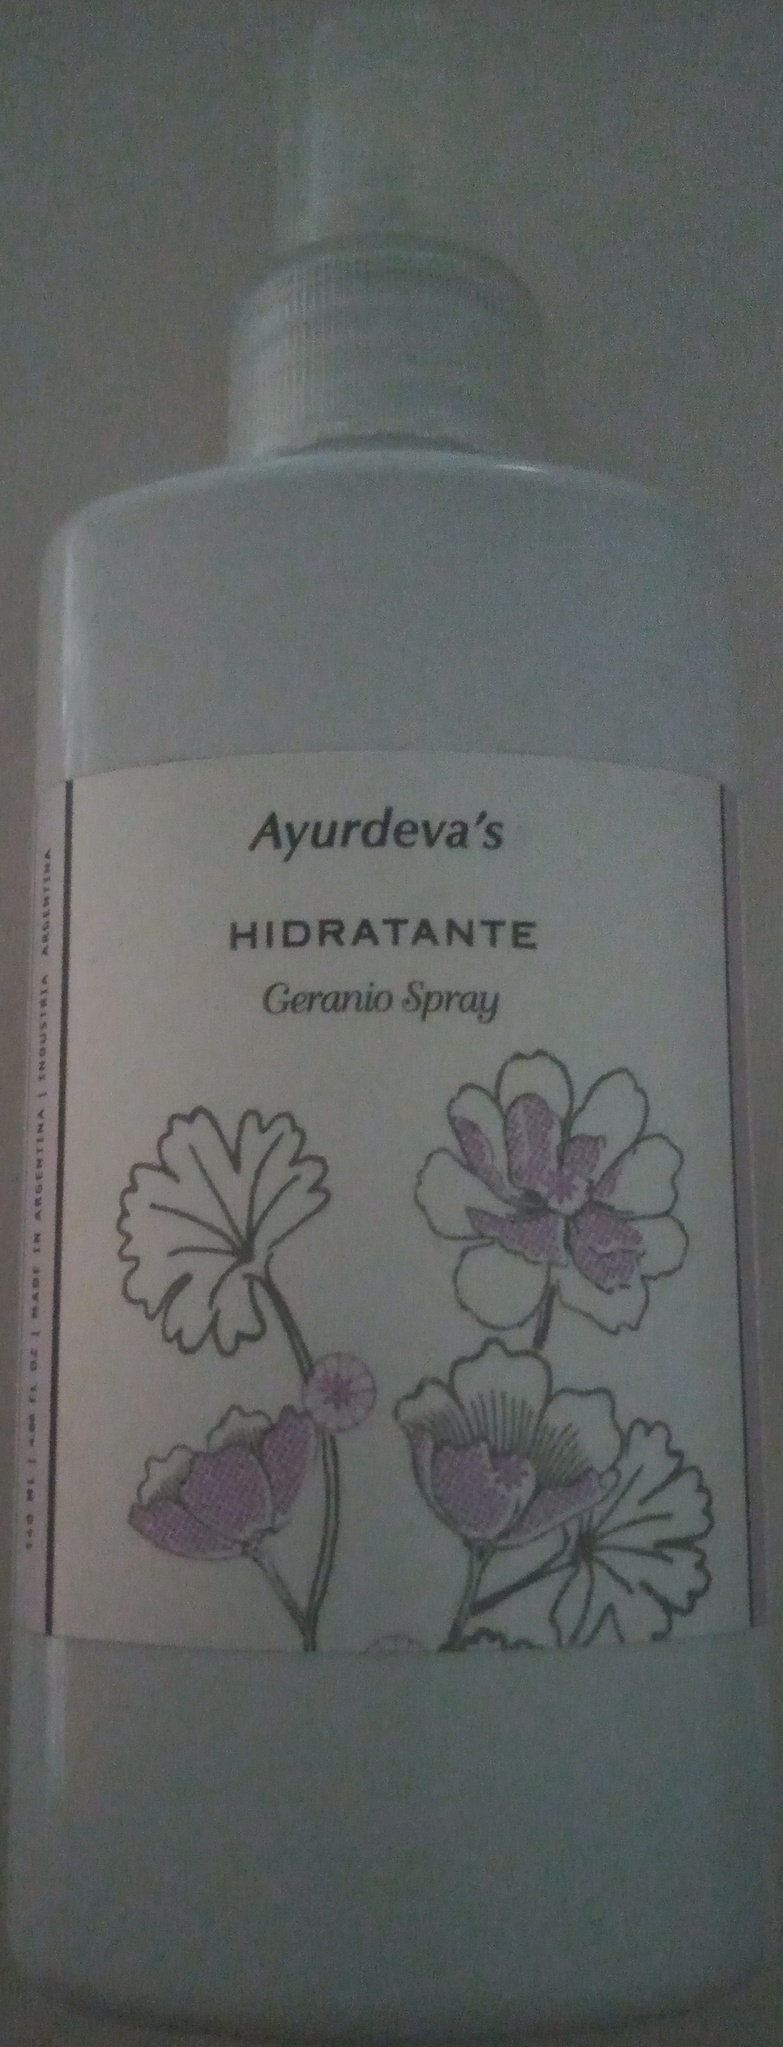 Ayuderva's Hidratante Geranio Spray